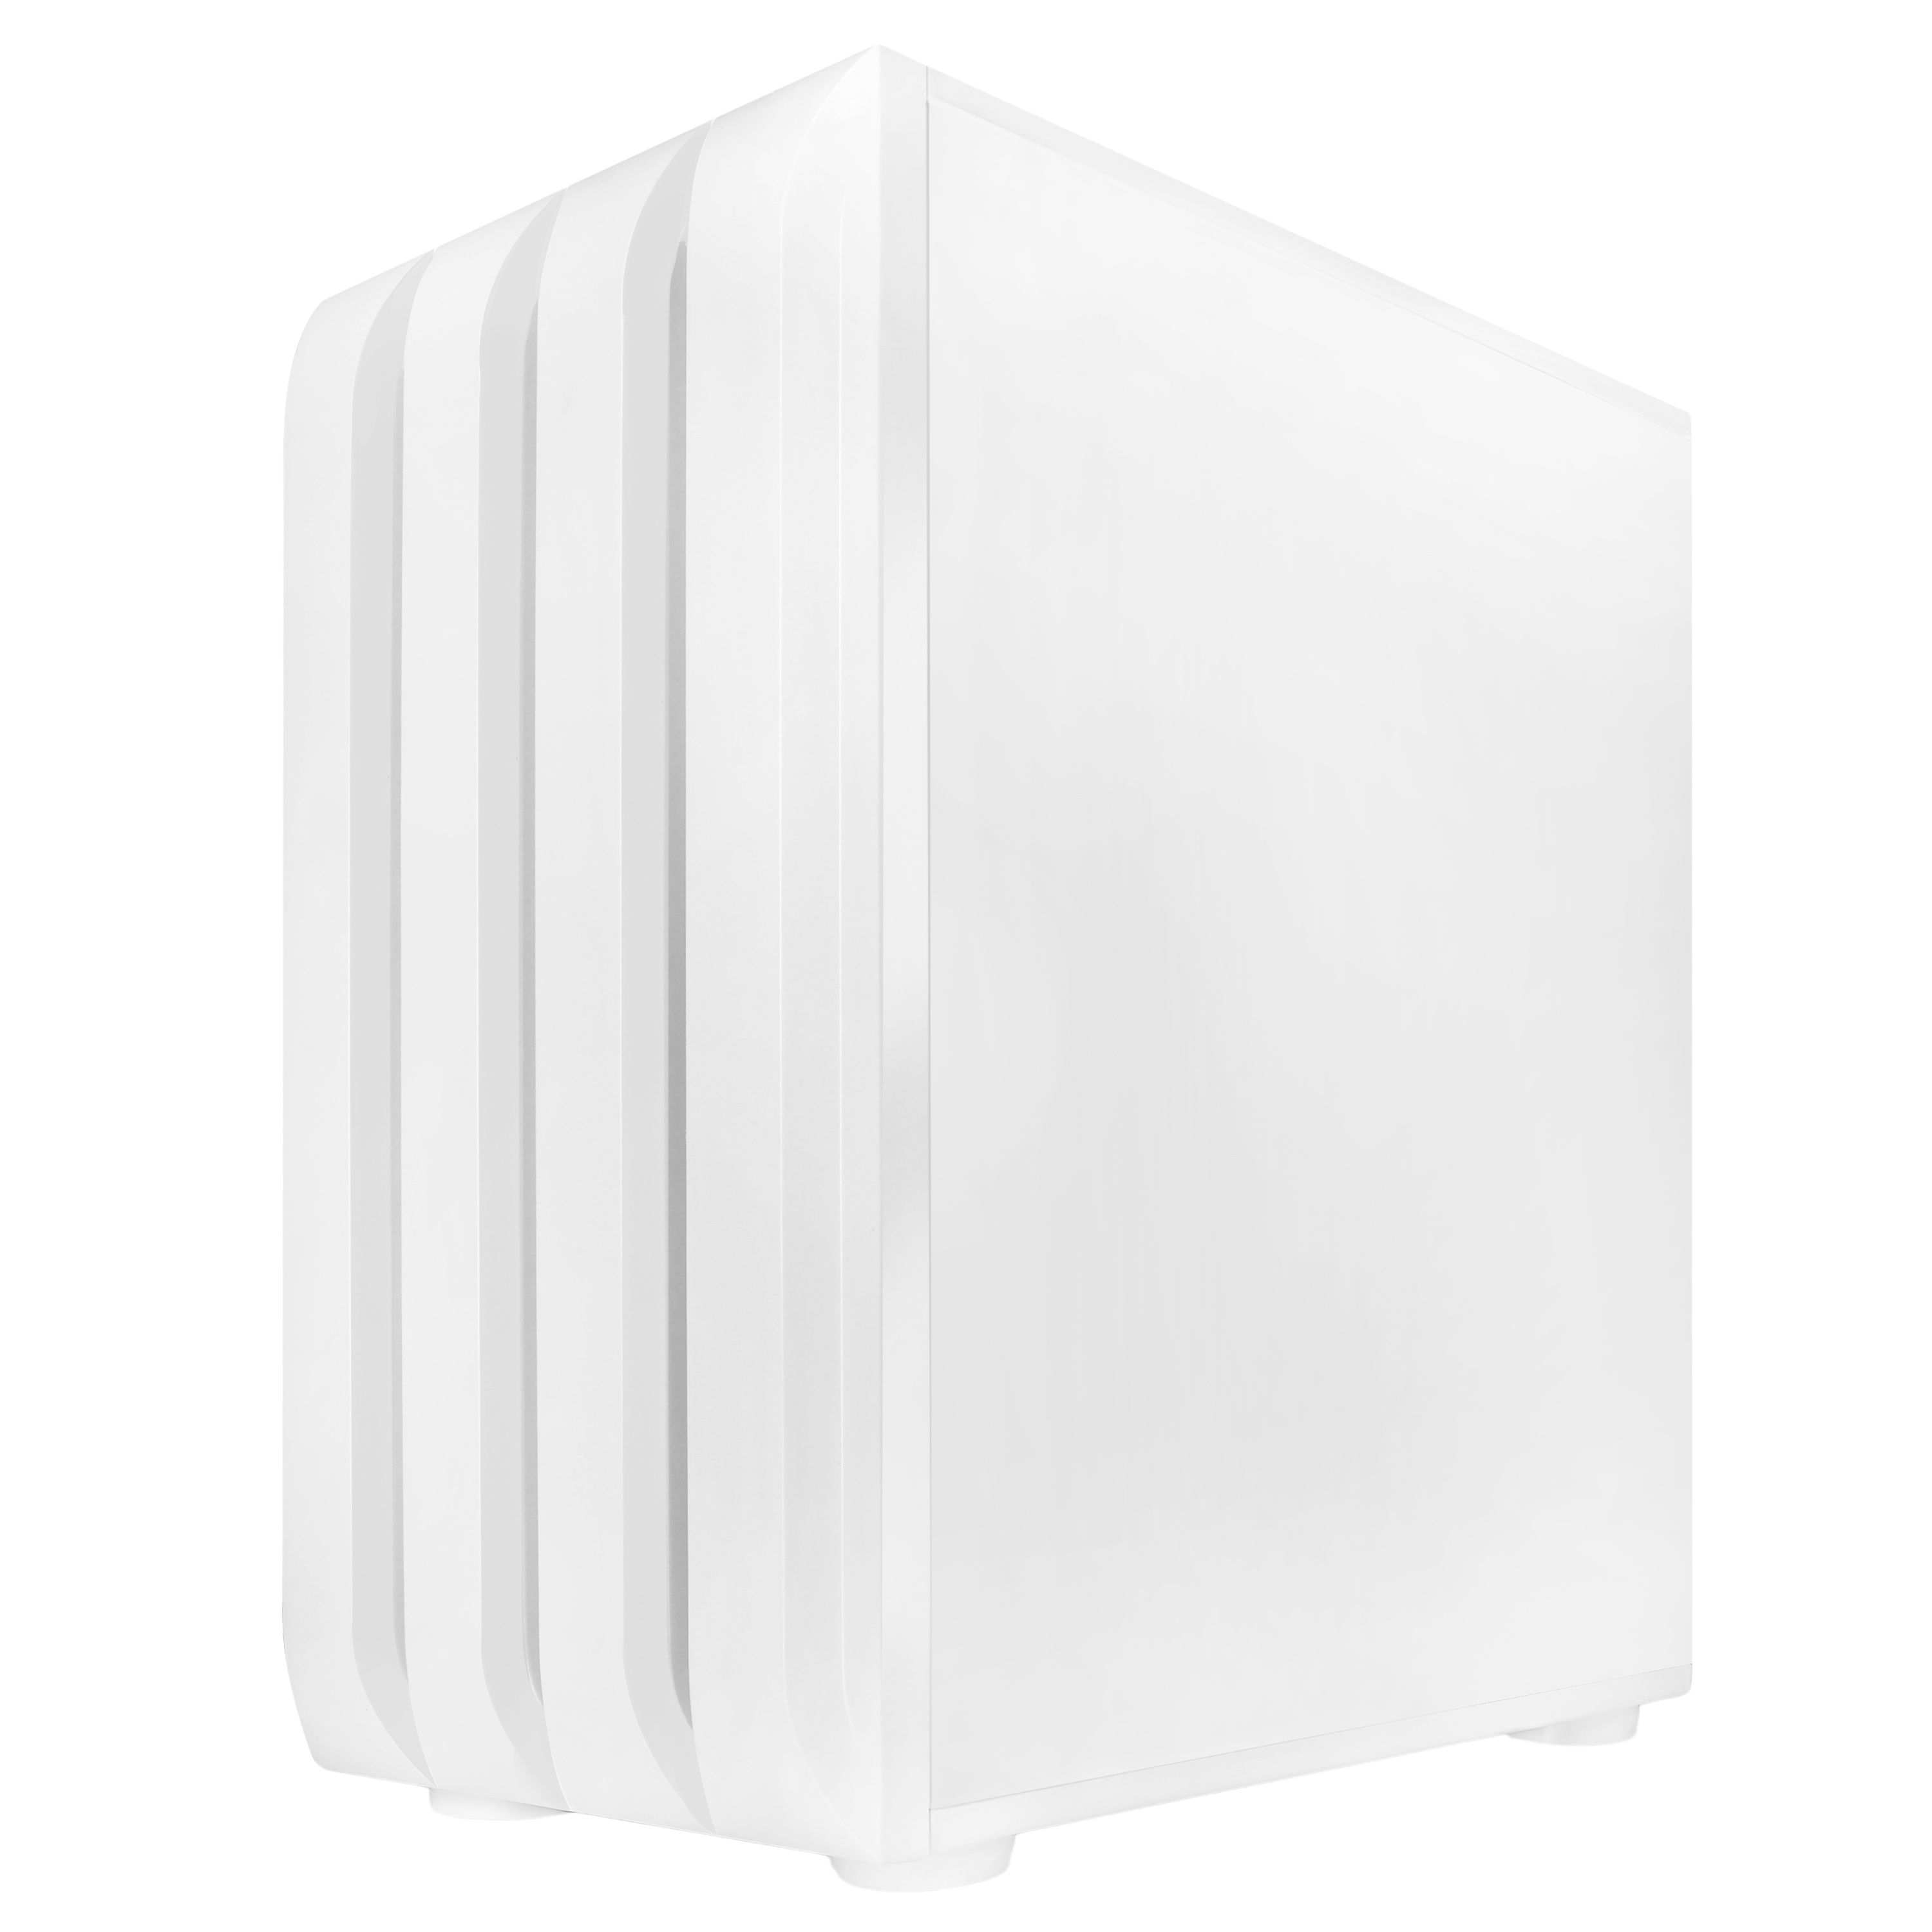 Rear view of a sleek white gaming PC case